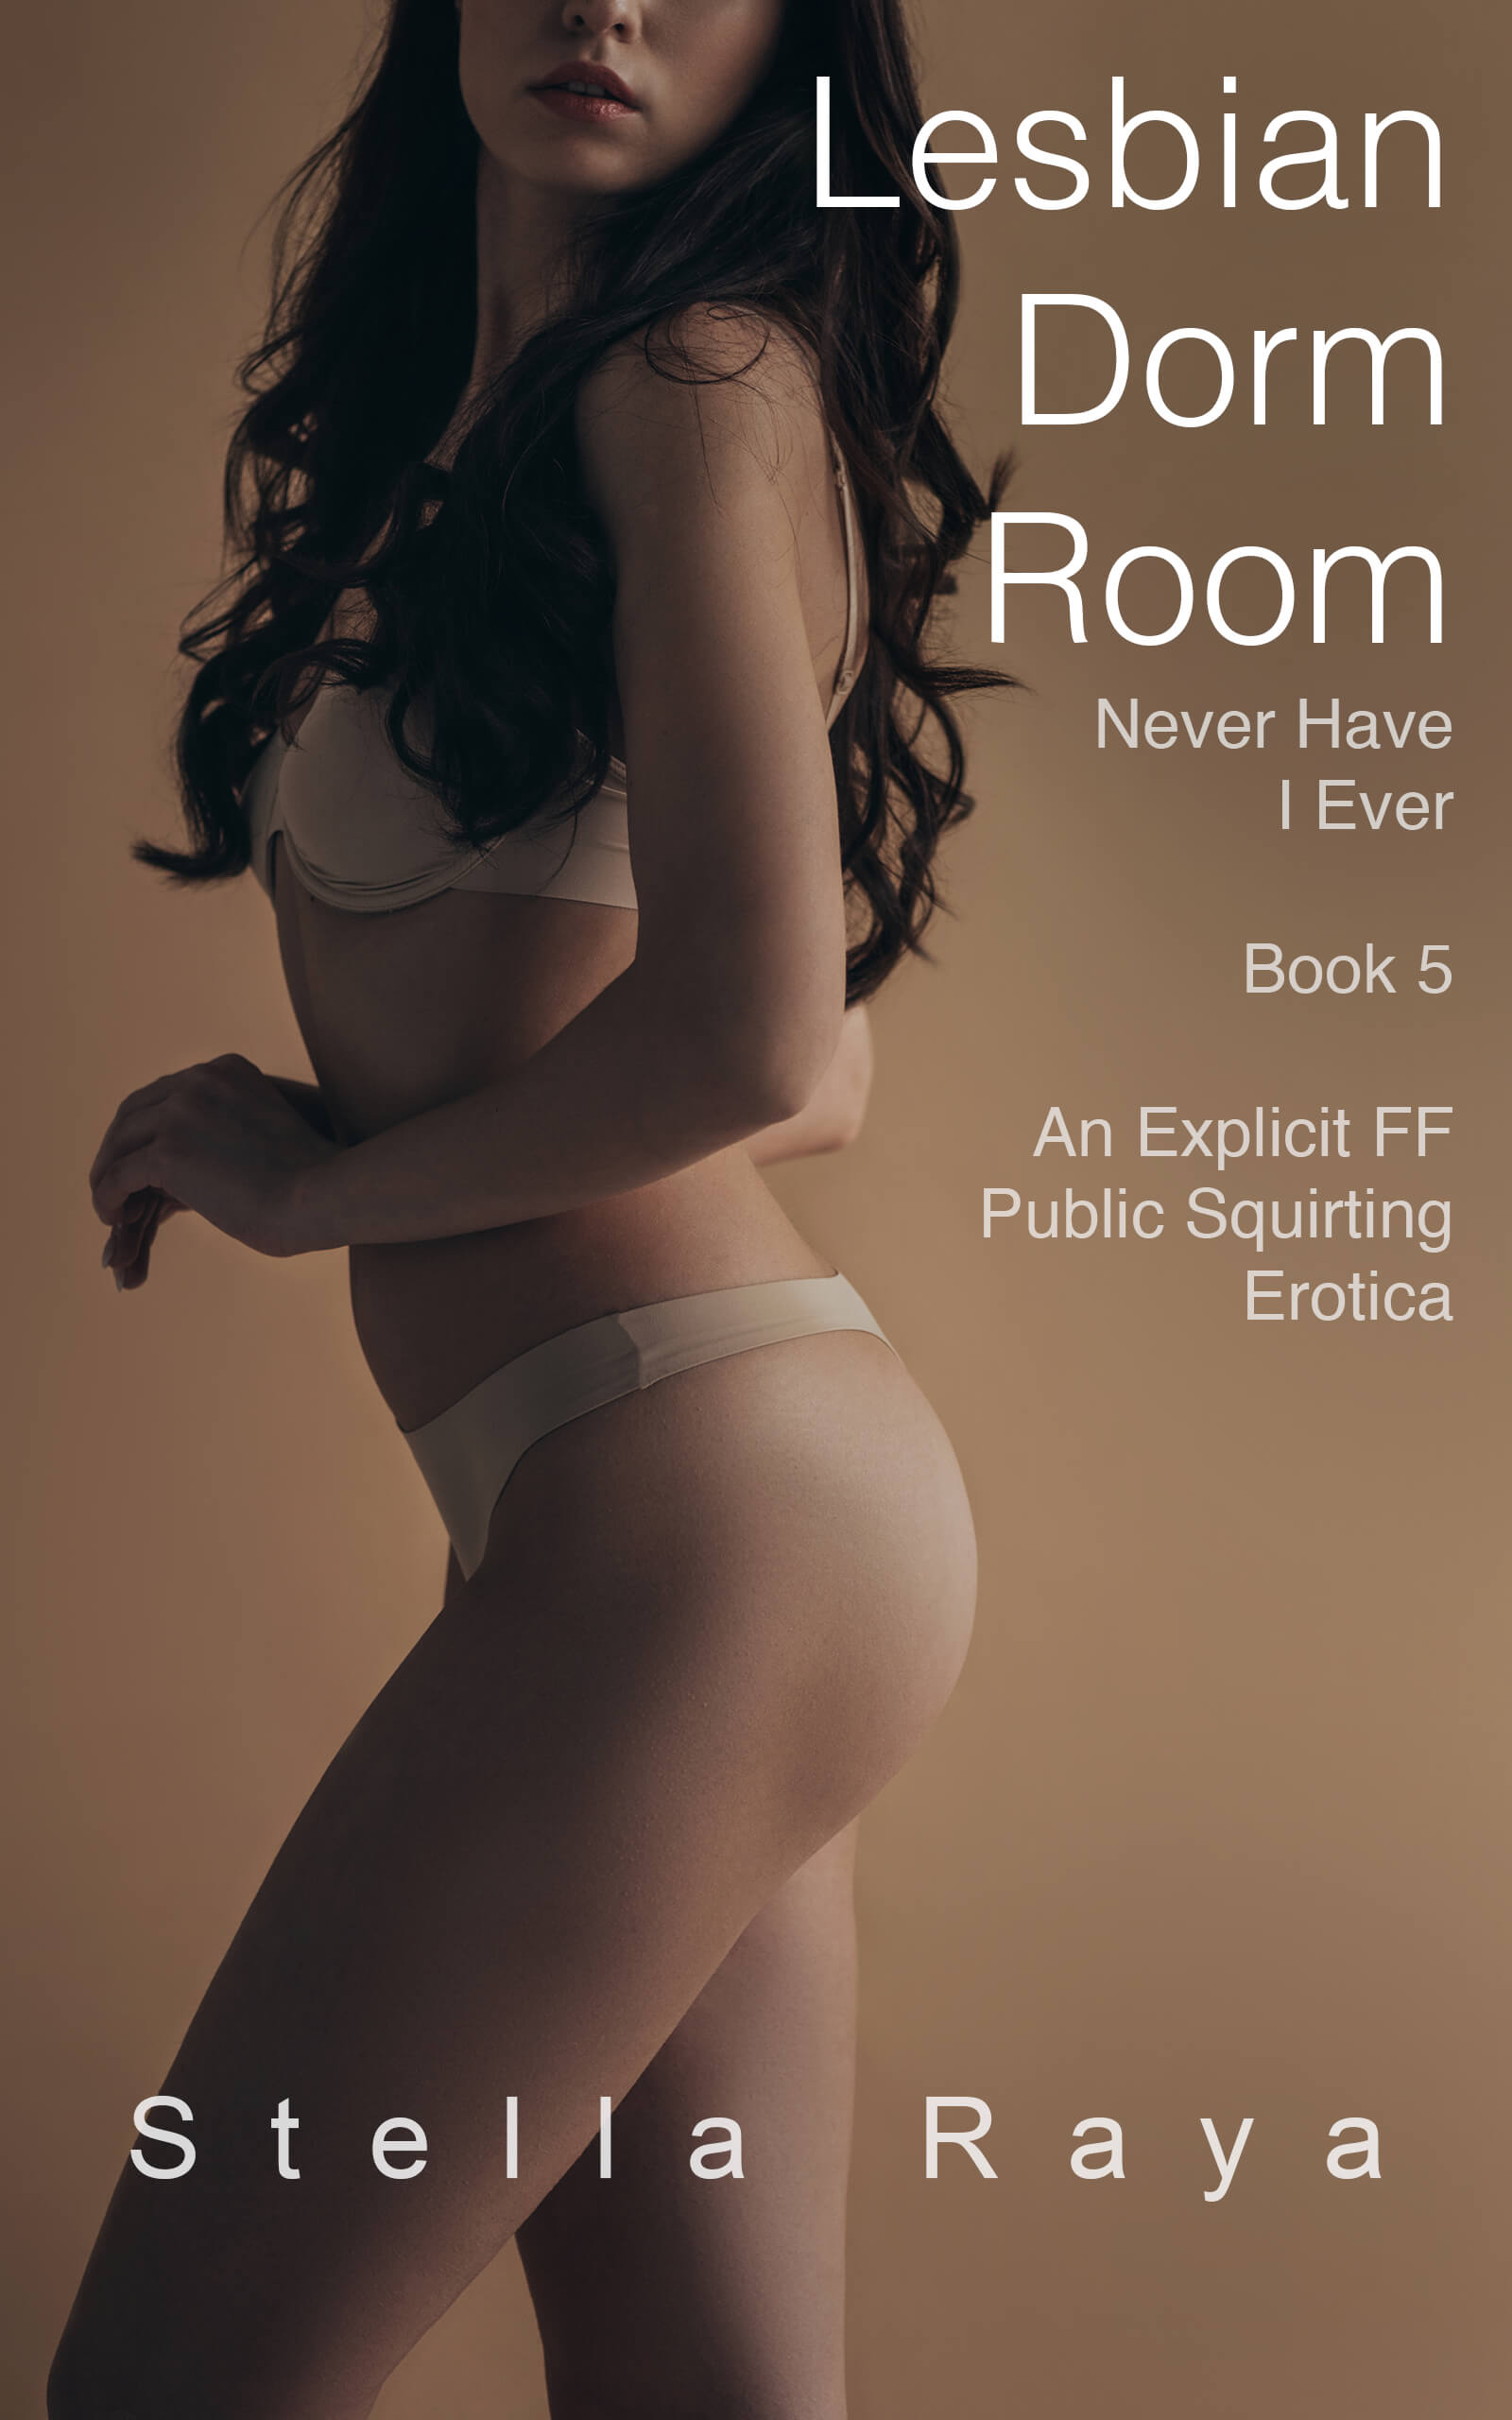 Lesbian Dorm Room Book 5 - Never Have I Ever